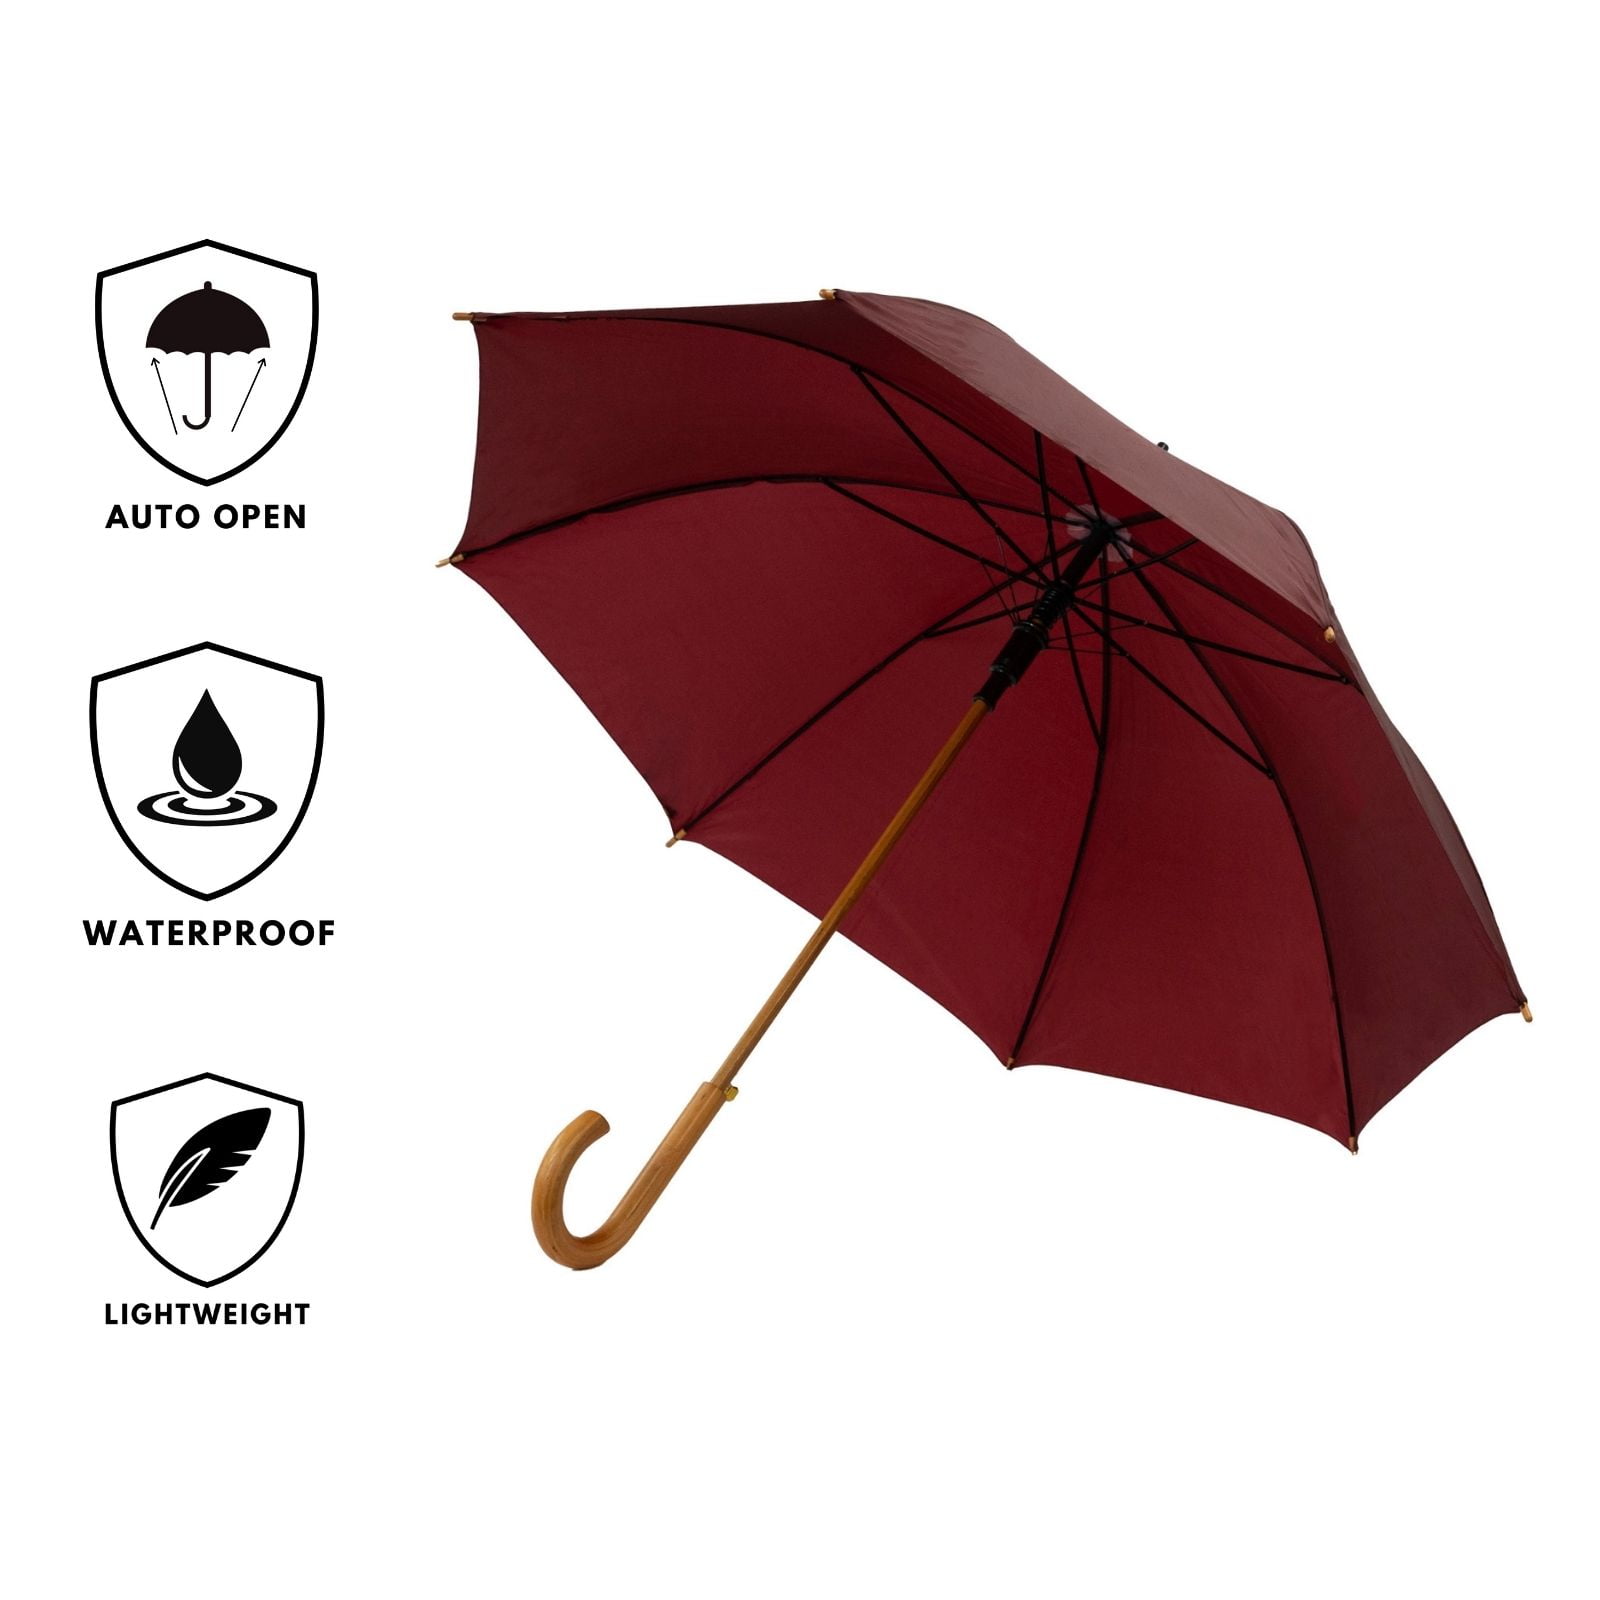 Maroon Wood Stick Umbrella features infographic